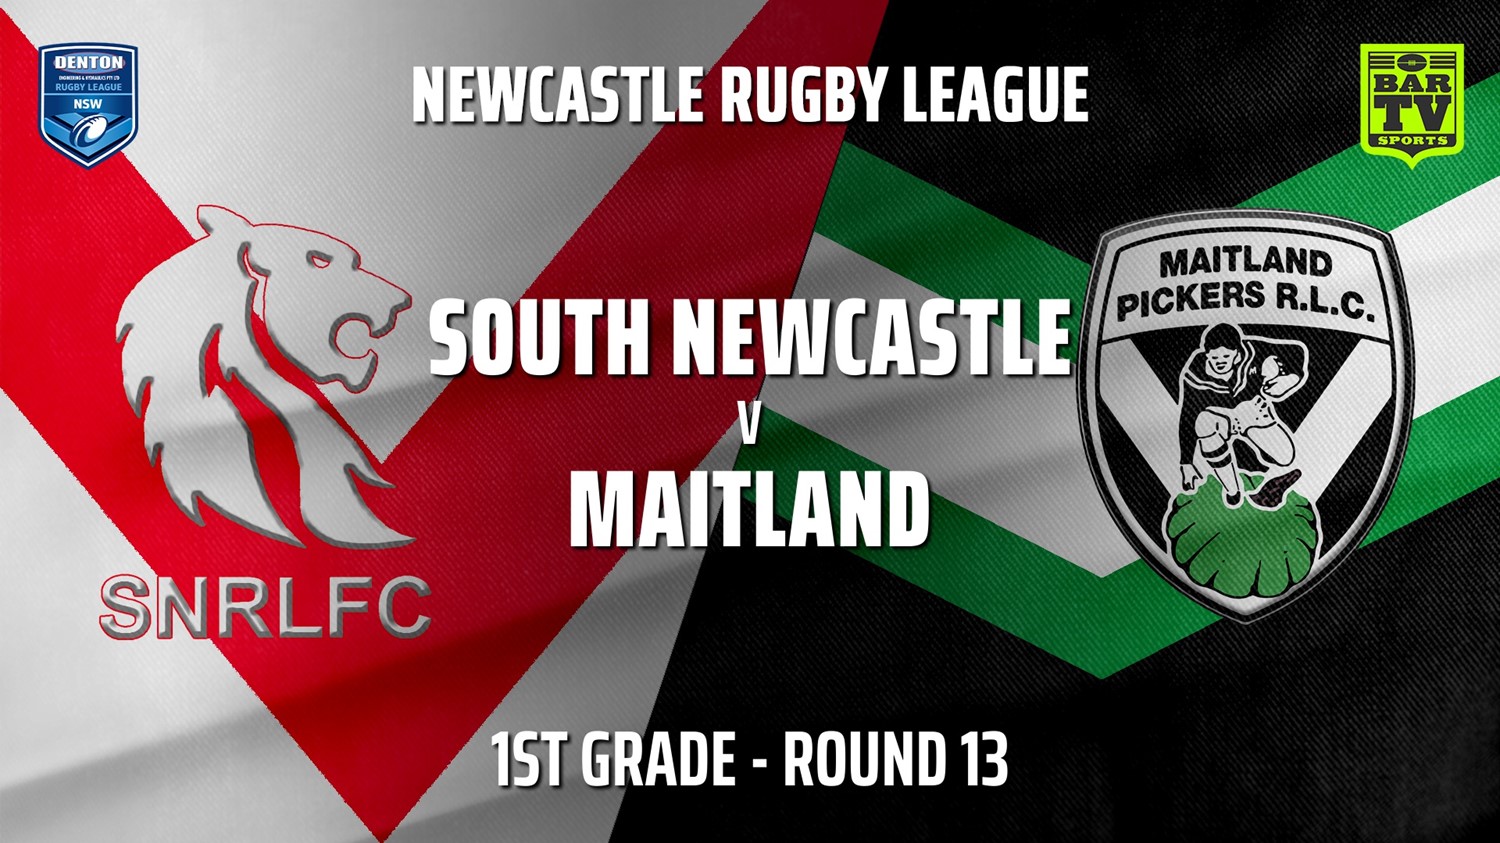 210704-Newcastle Round 13 - 1st Grade - South Newcastle v Maitland Pickers Minigame Slate Image